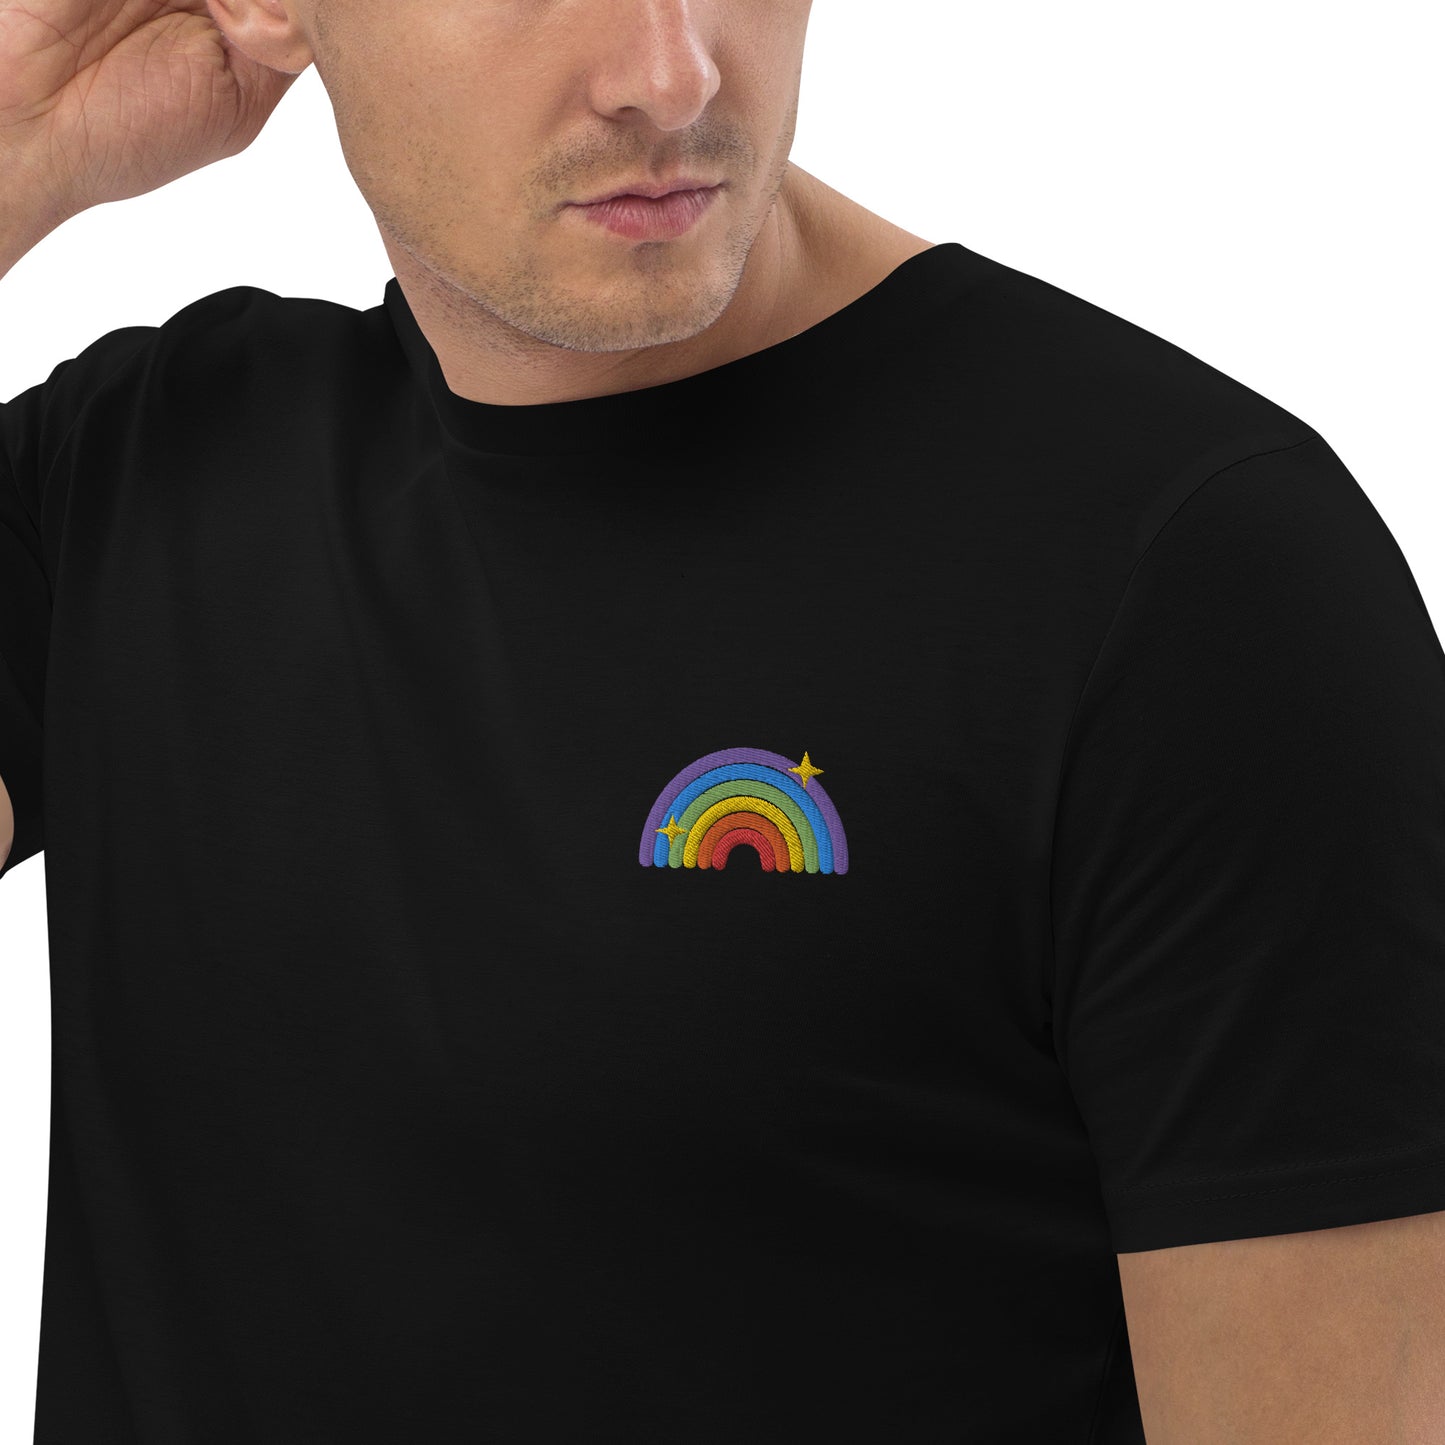 T-shirt en coton biologique : broderie queer arc-en-ciel